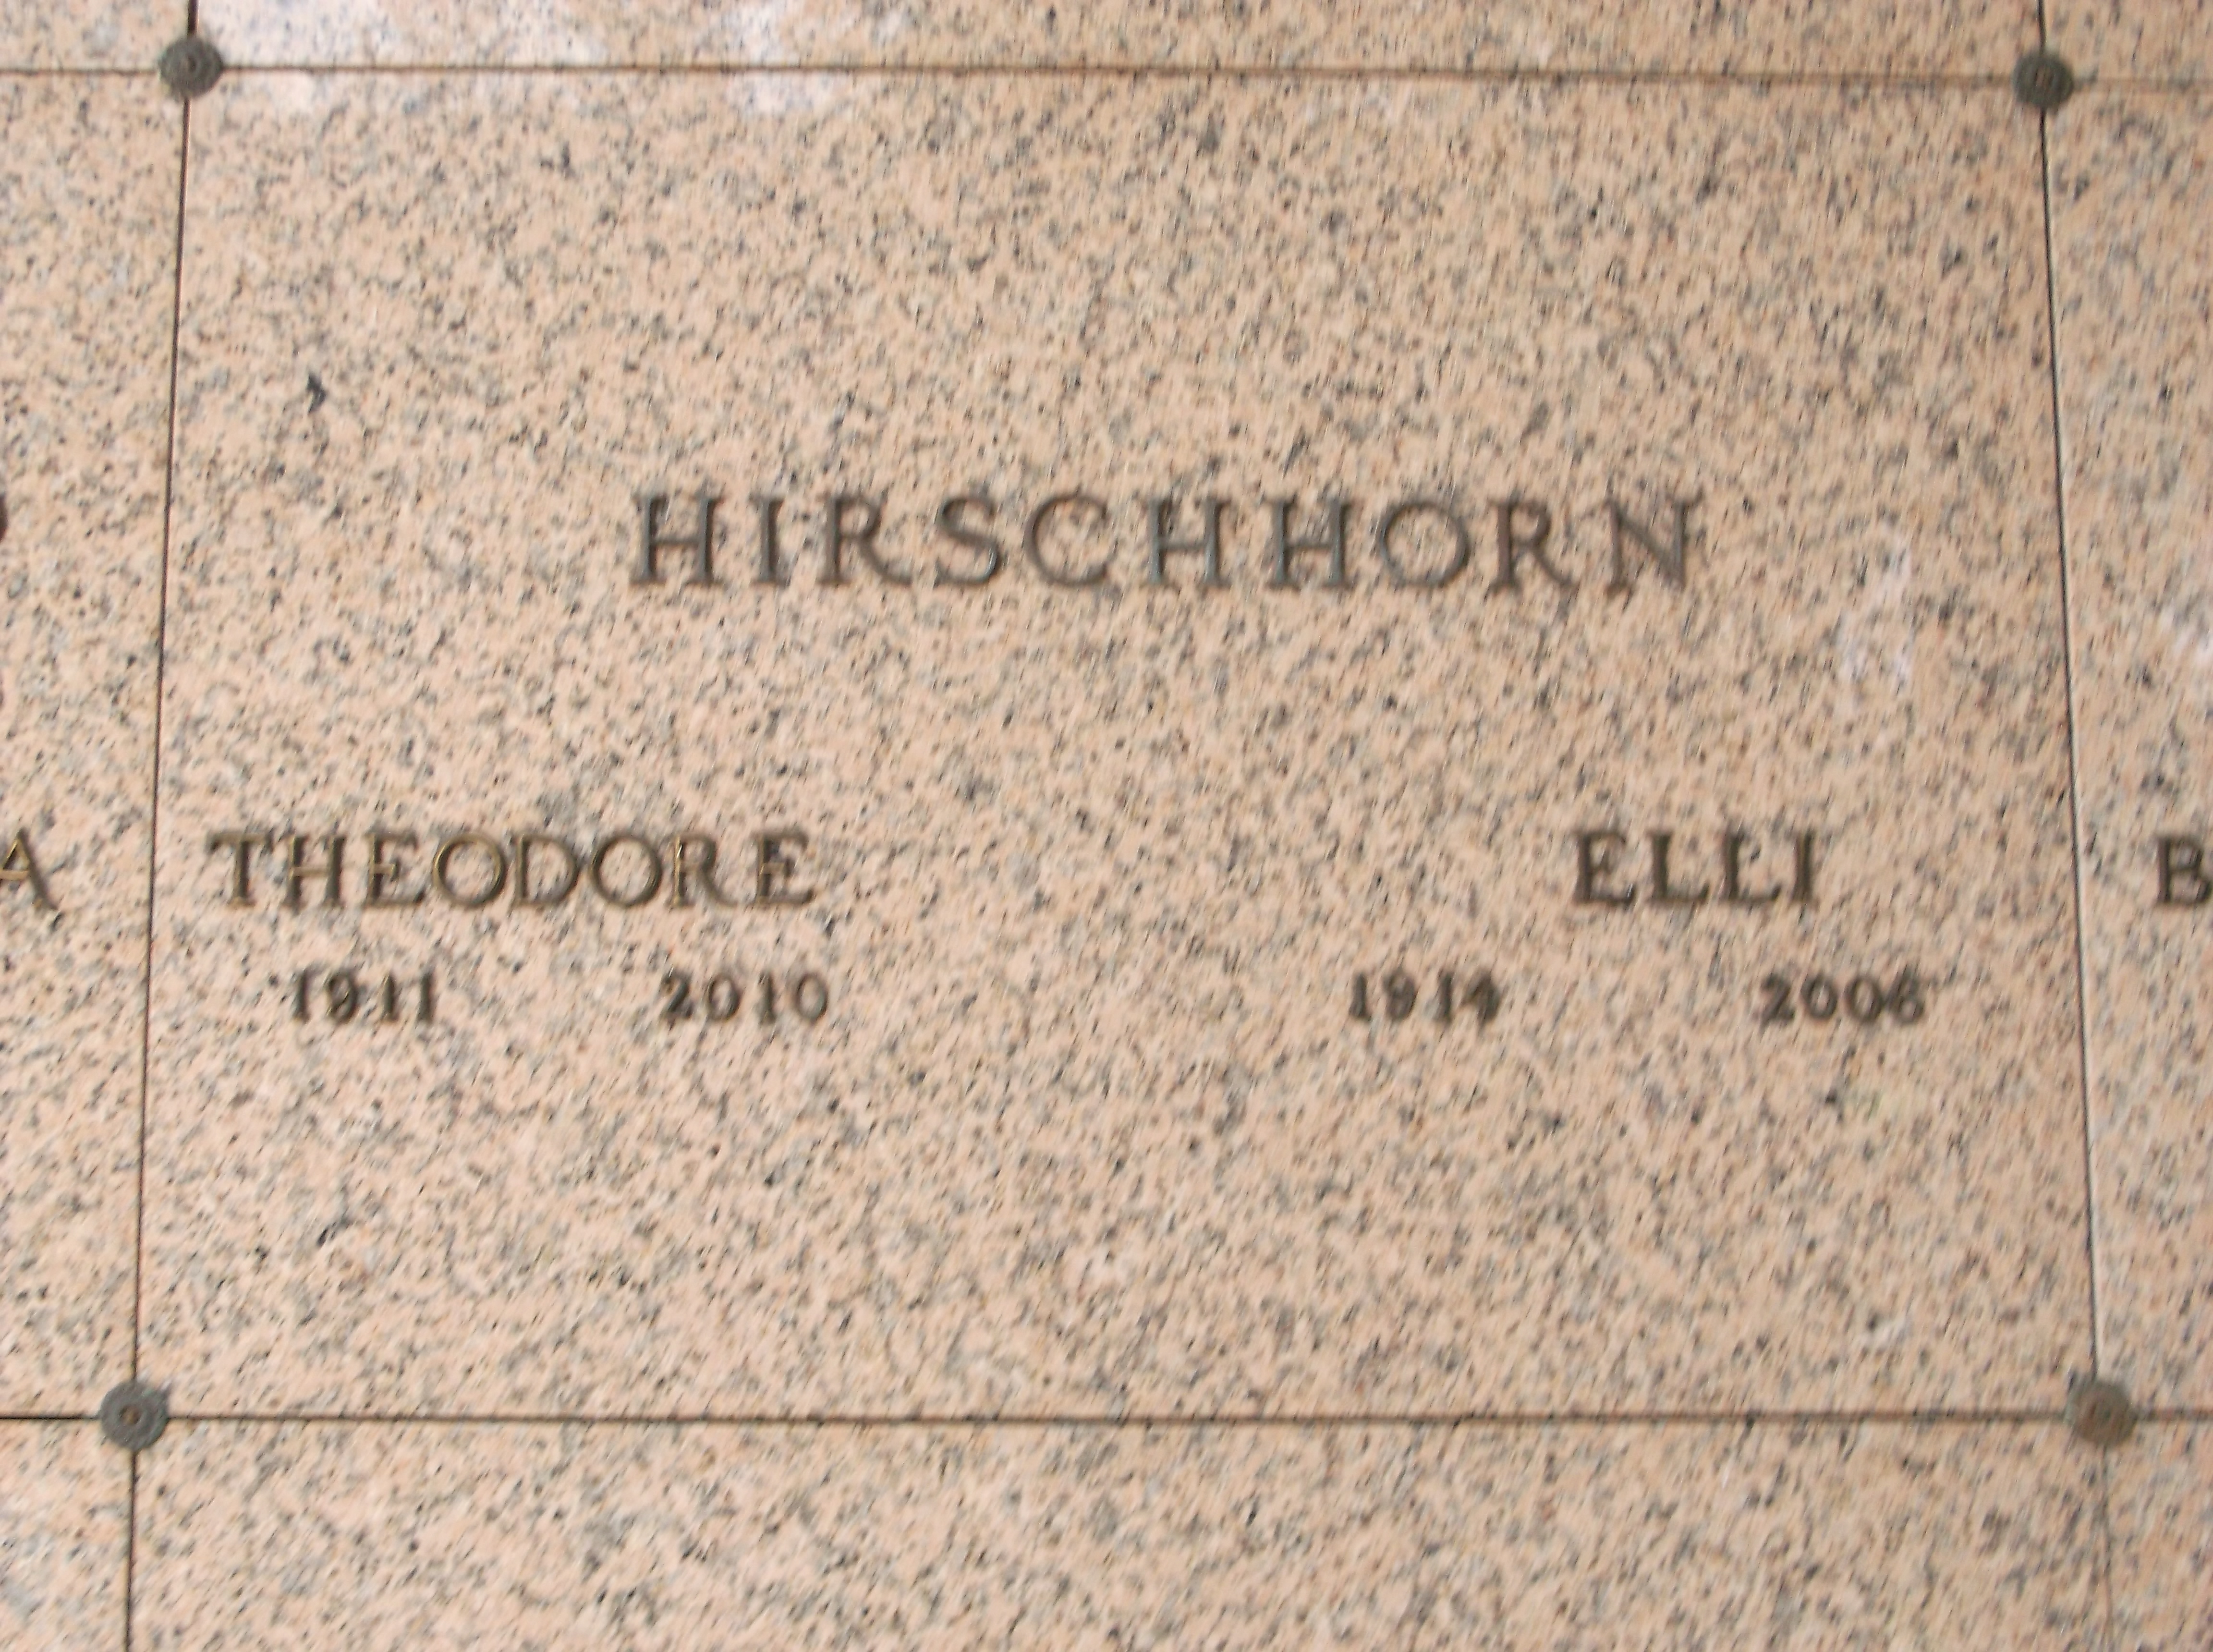 Theodore Hirschhorn